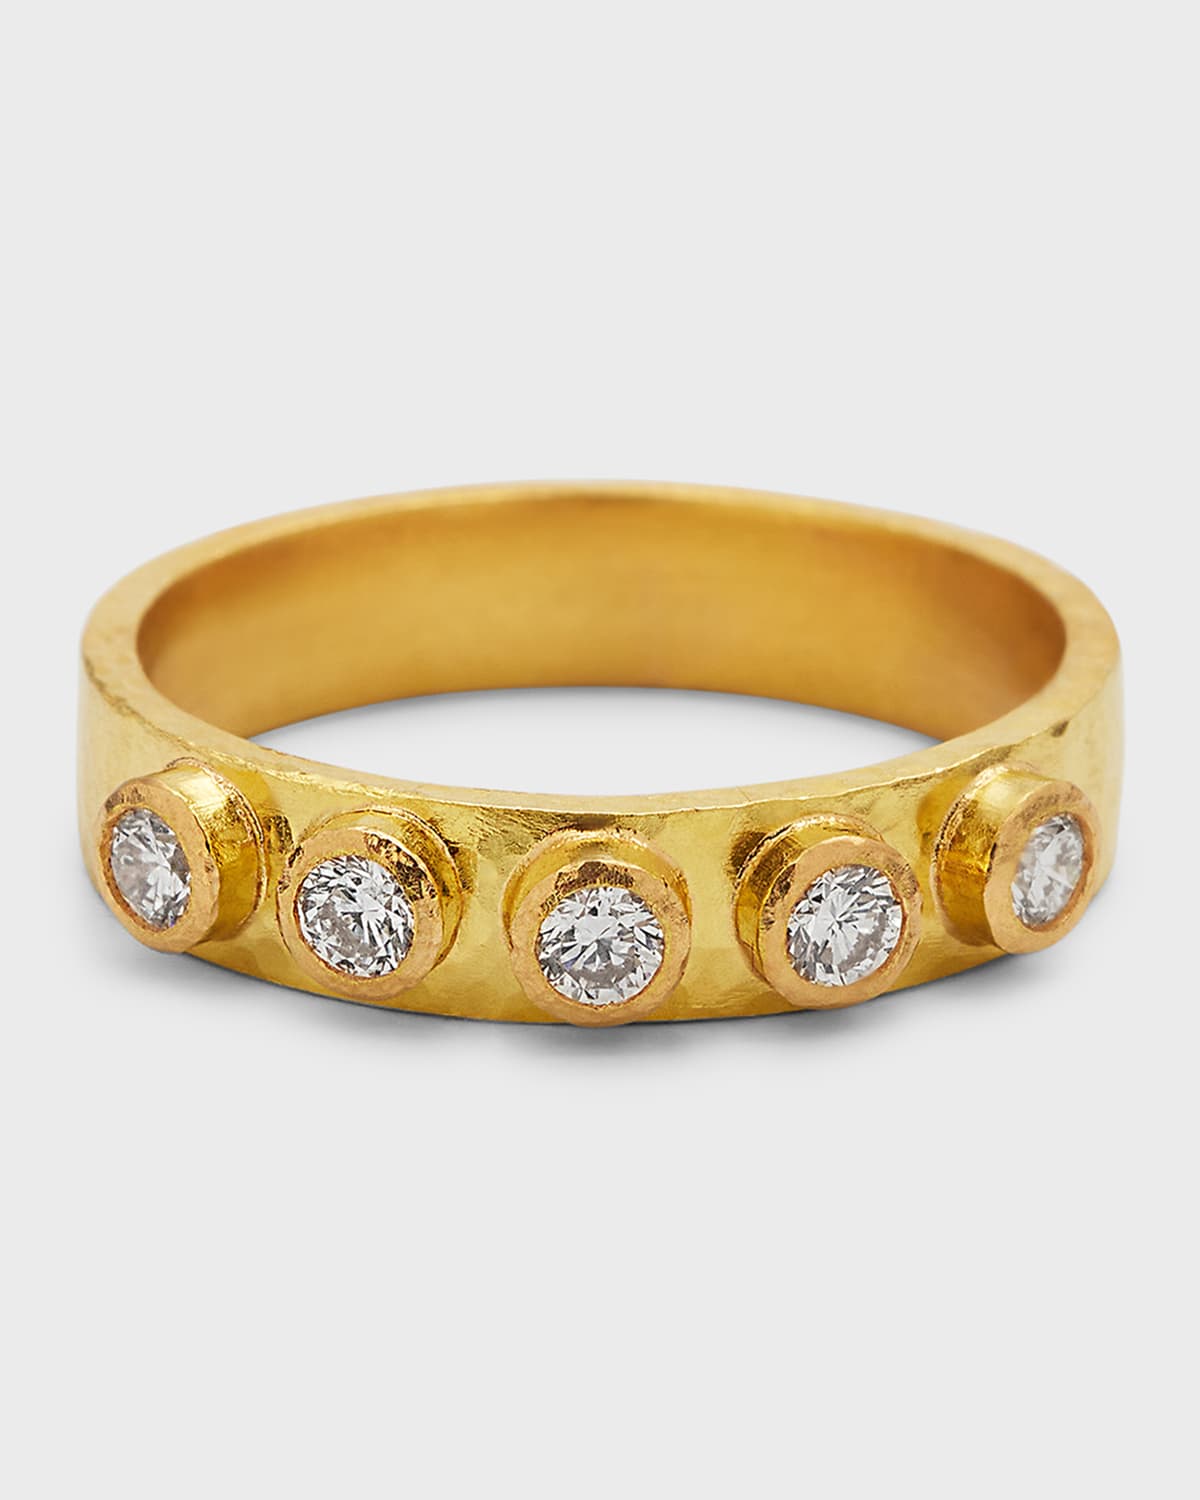 Elizabeth Locke 19K Yellow Gold Diamond Flat Ribbon Stack Ring, Size 6.5